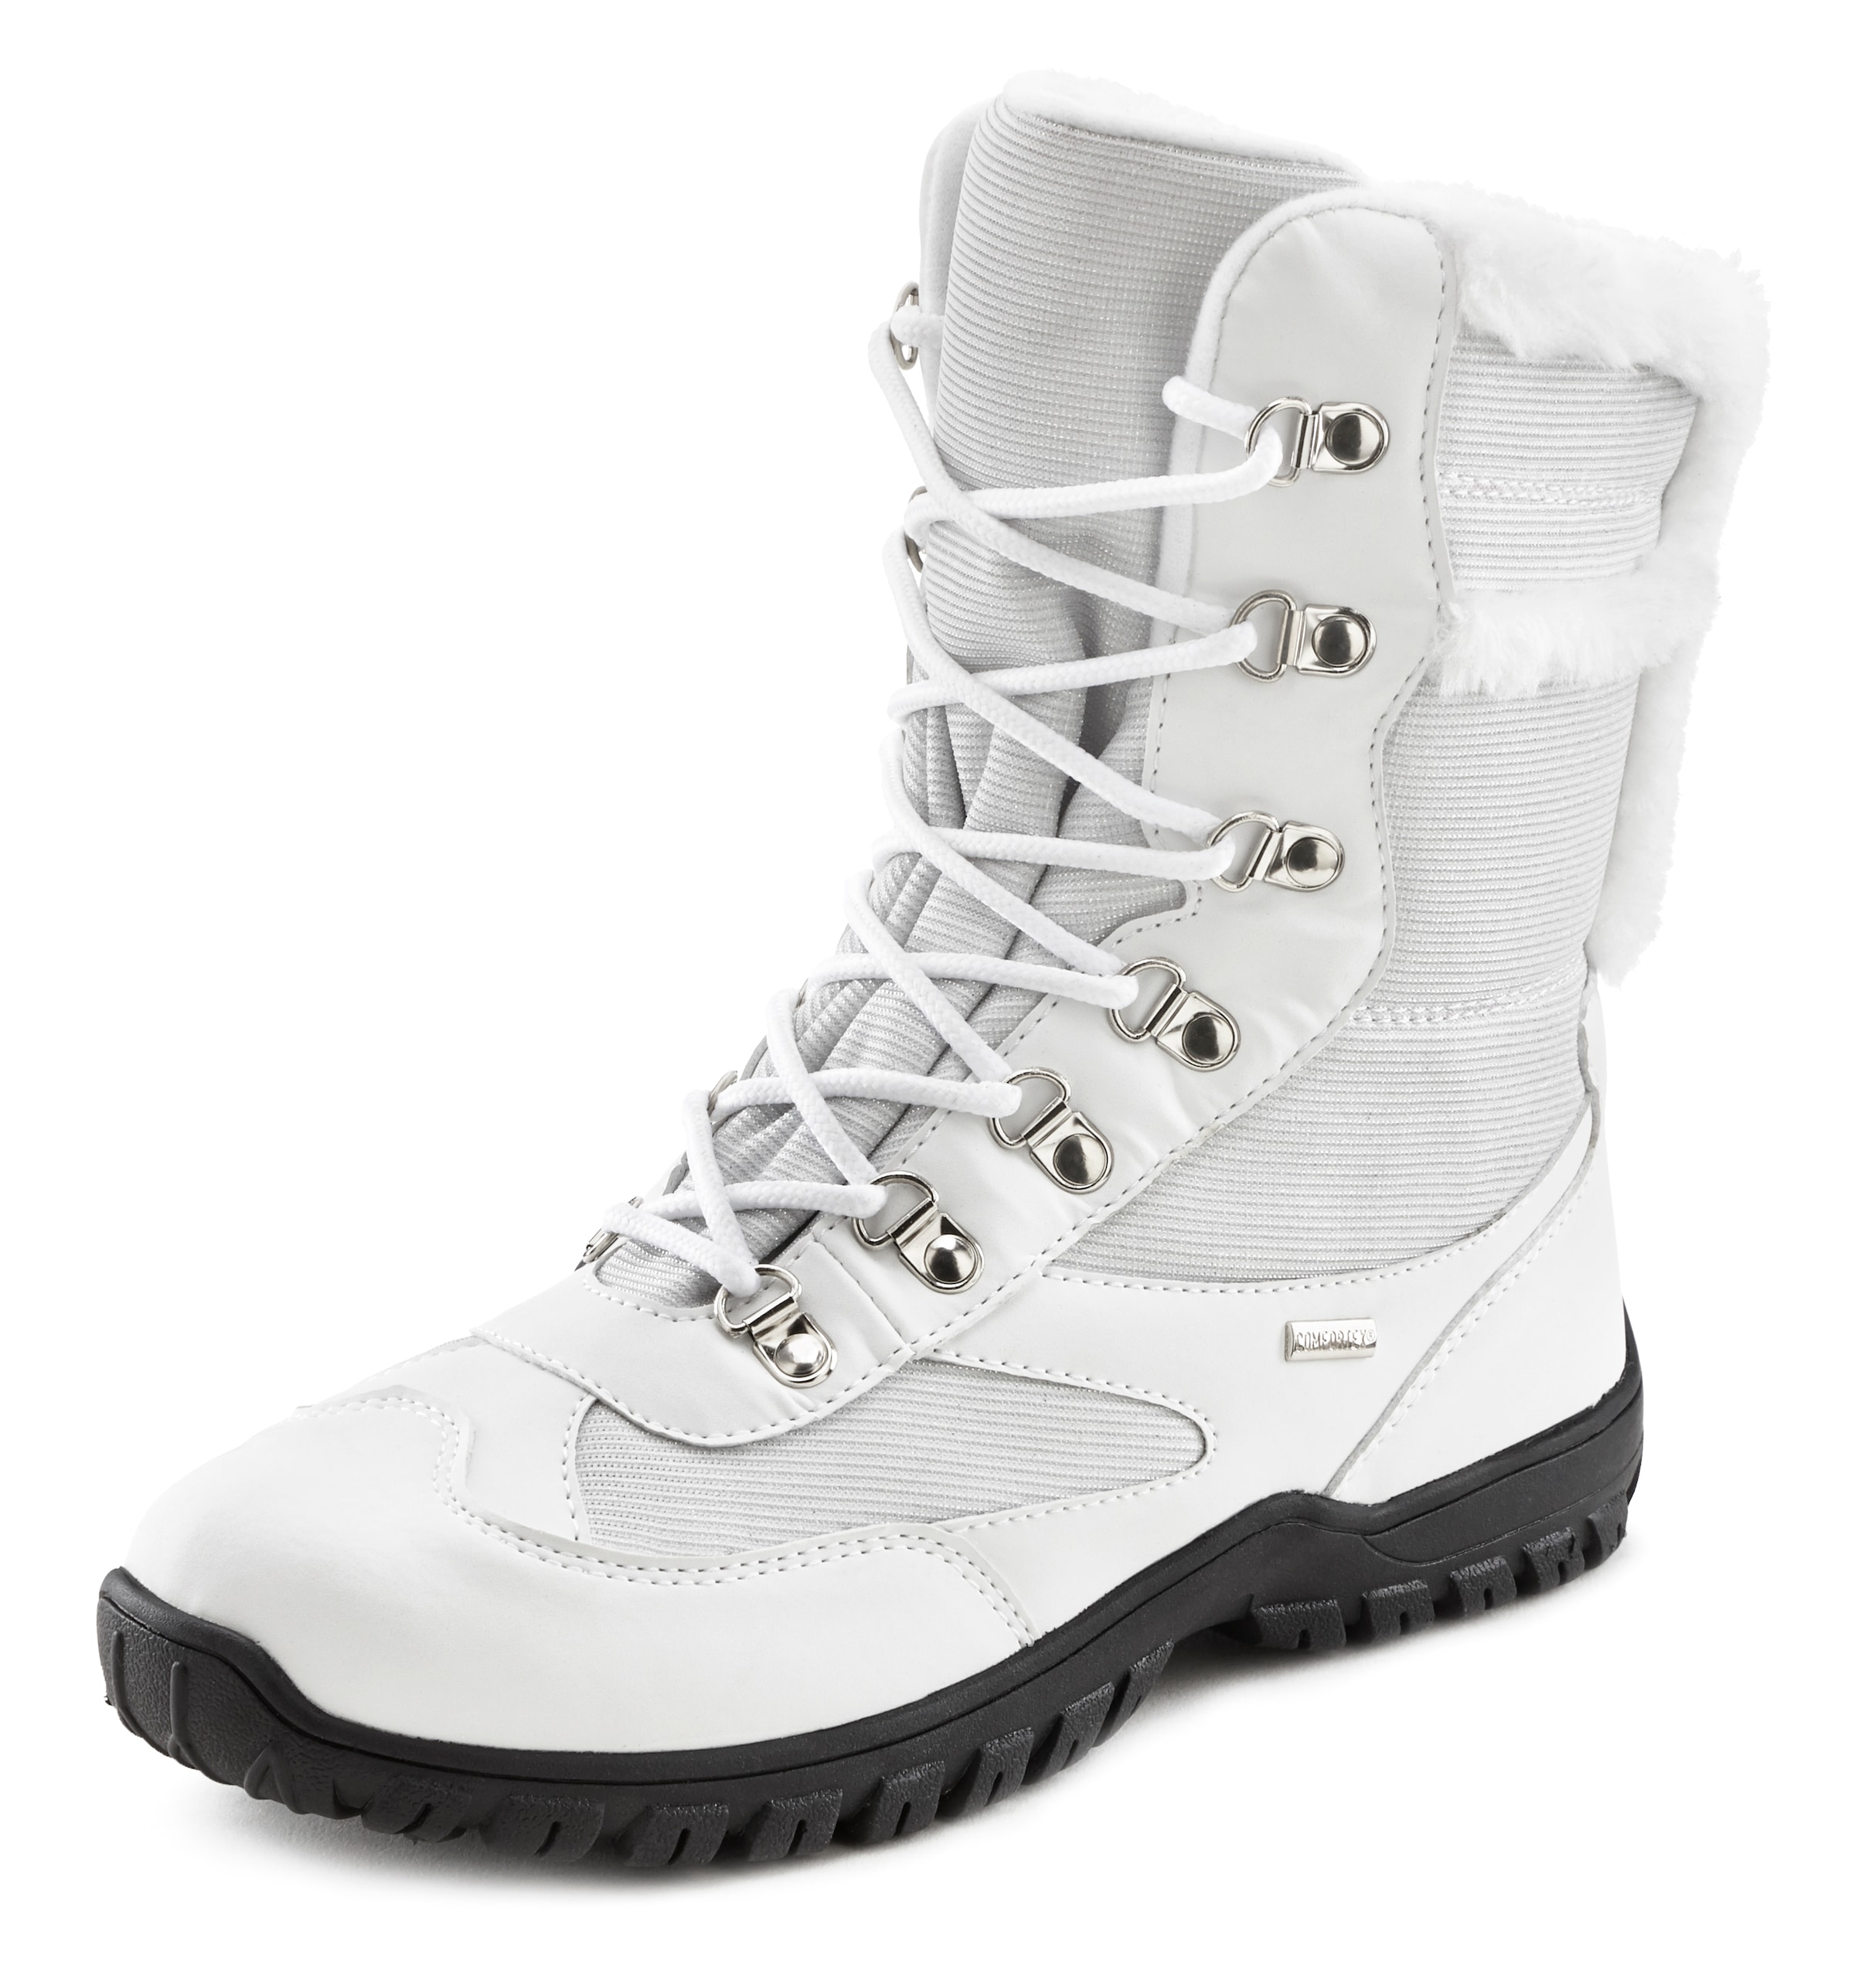 LASCANA Winterstiefel "Snow Boots, Stiefelette,", Snow Boots, Outdoor Stiefelette, wind & wasserabweisend, Profilsohle